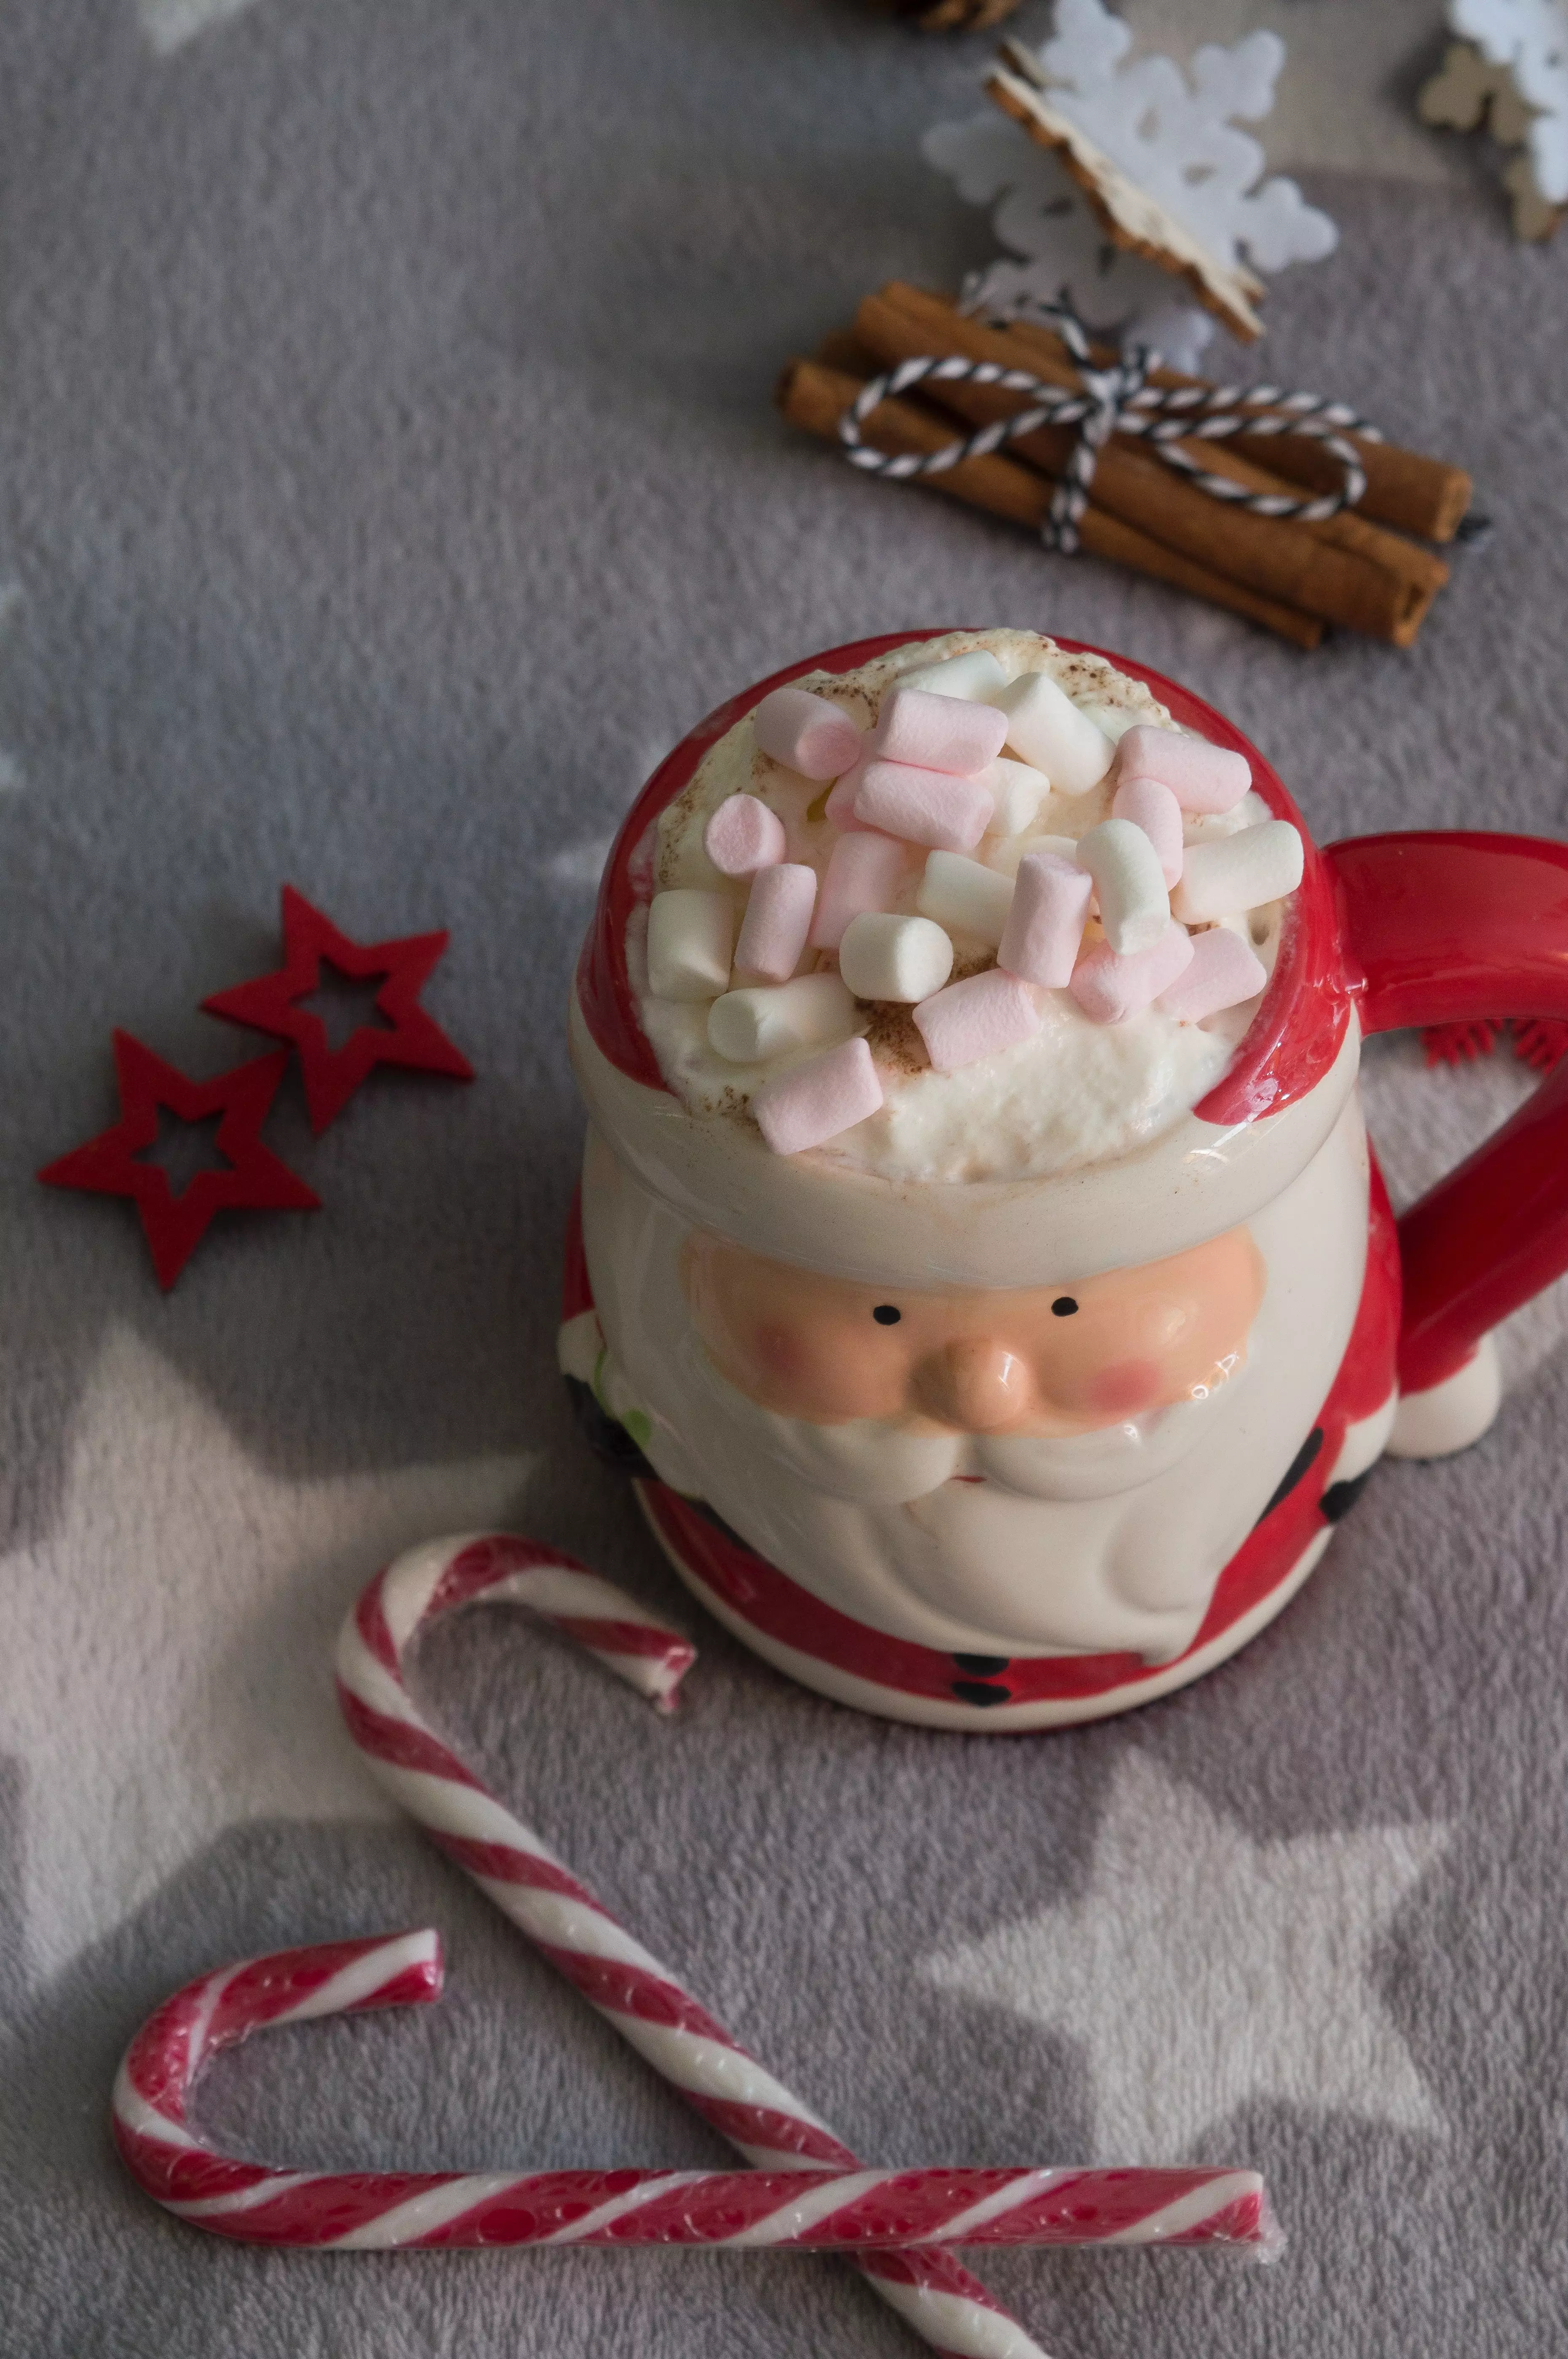 A hot chocolate often blasts away winter blues (